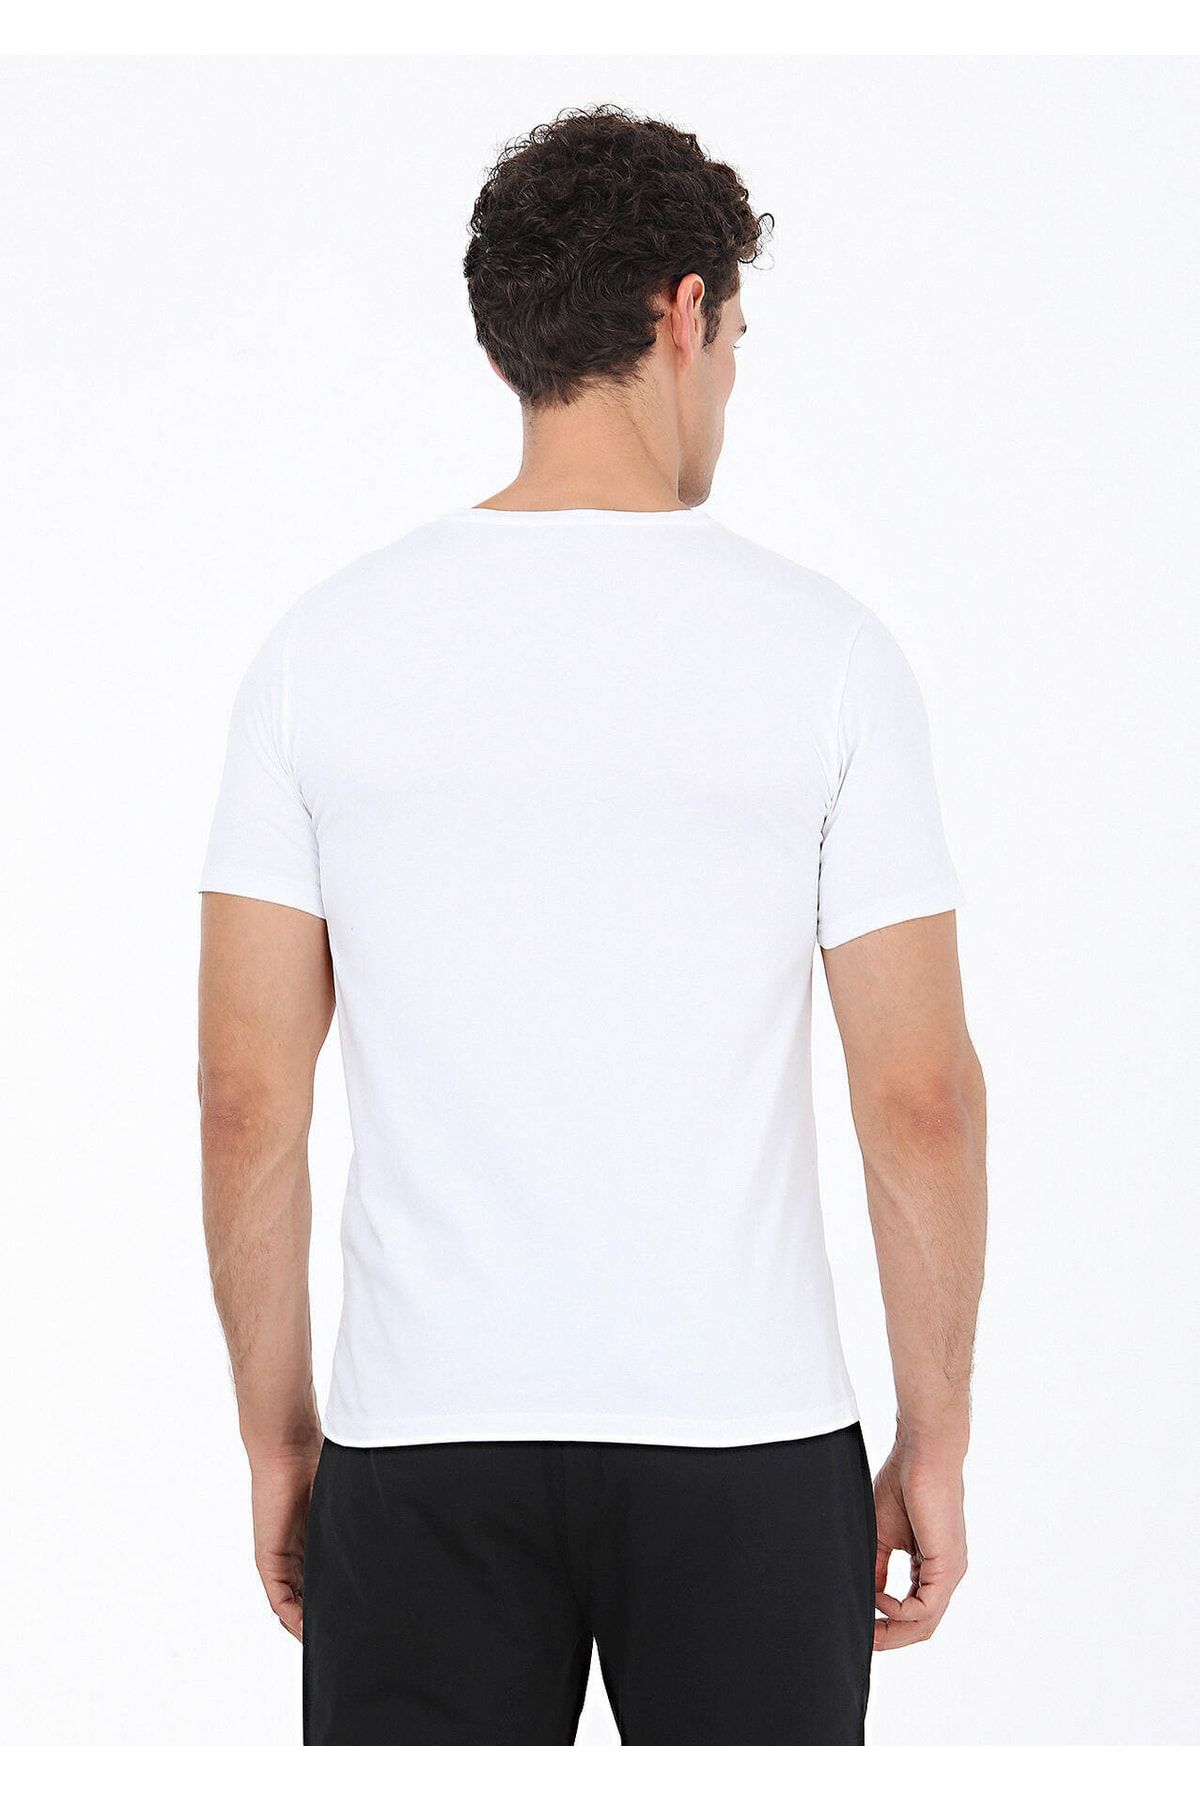 Kip گردن دوچرخه چاپی سفید 100 ٪ تی شرت پنبه